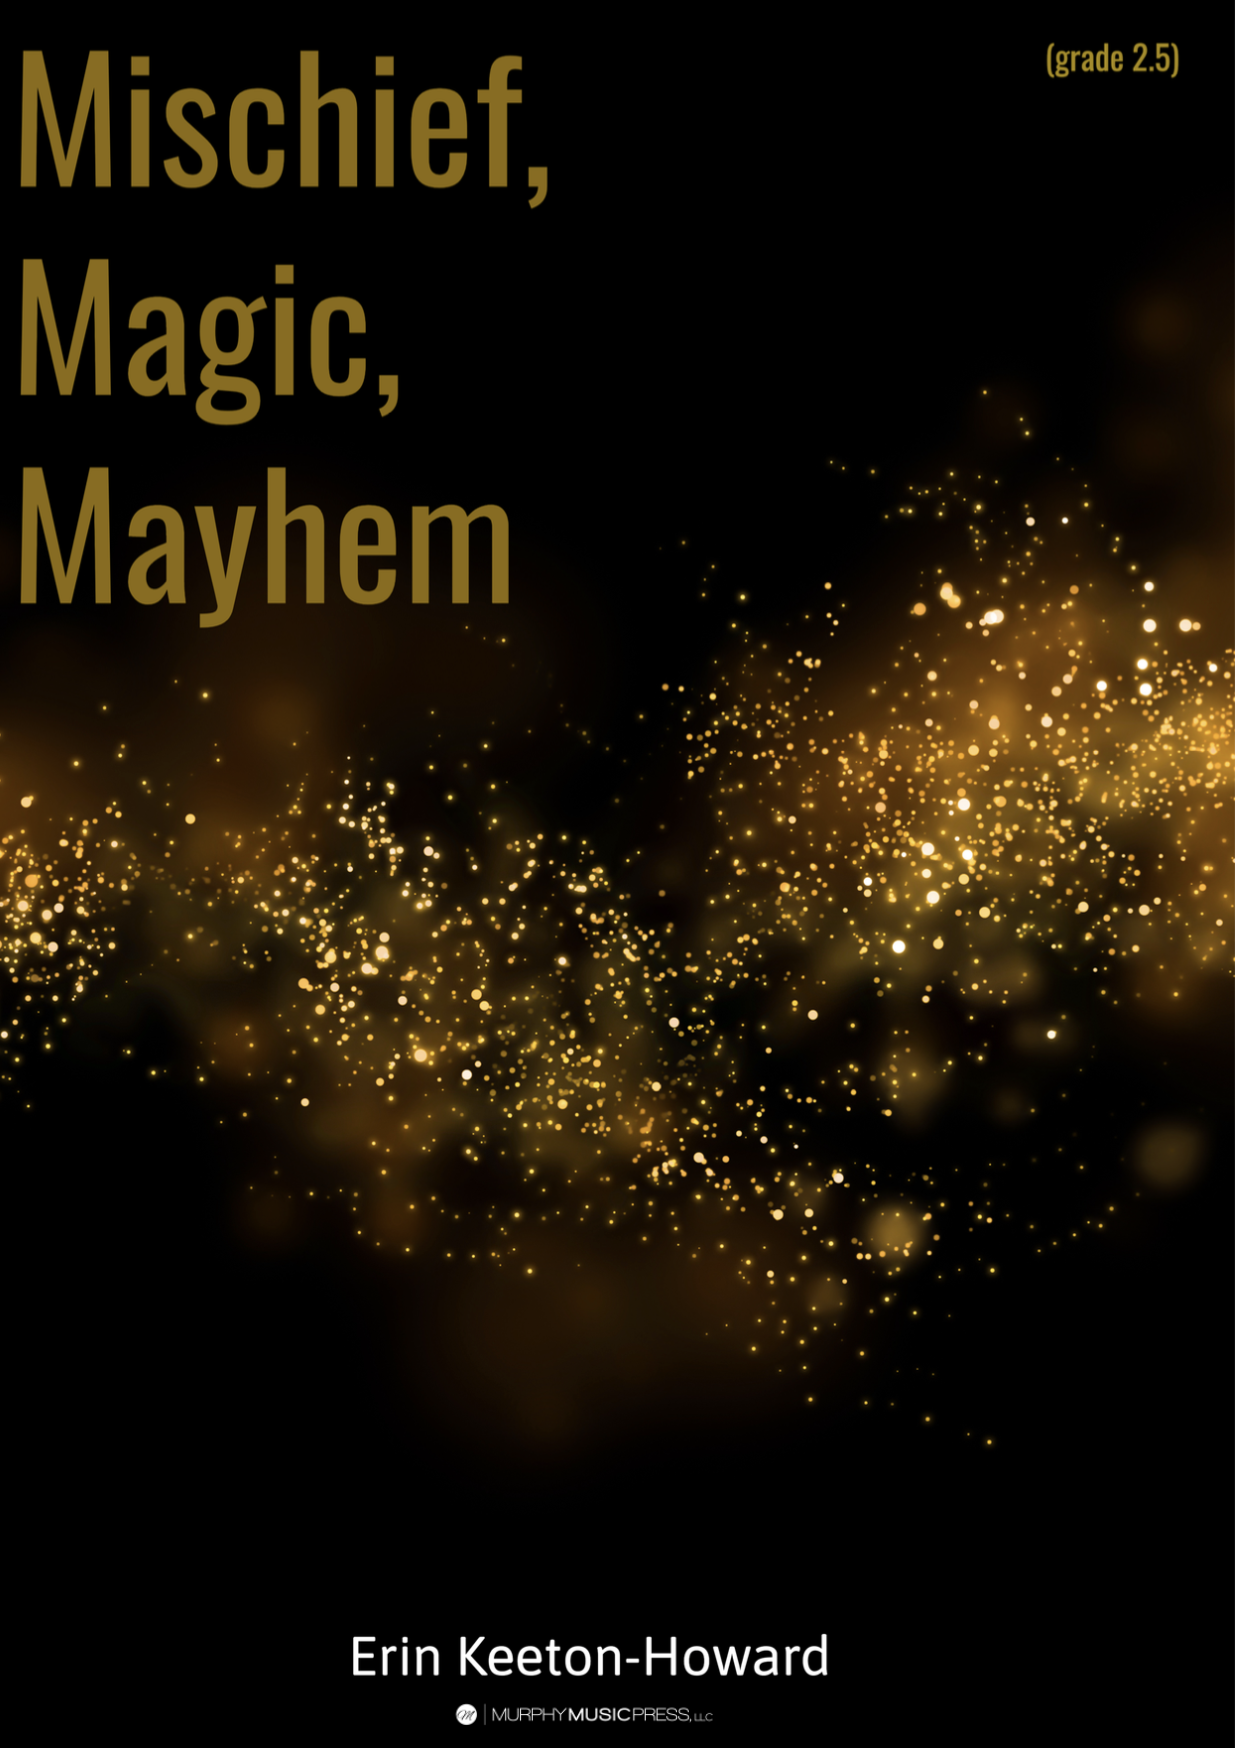 Mischief, Magic, Mayhem by Erin Keeton-Howard